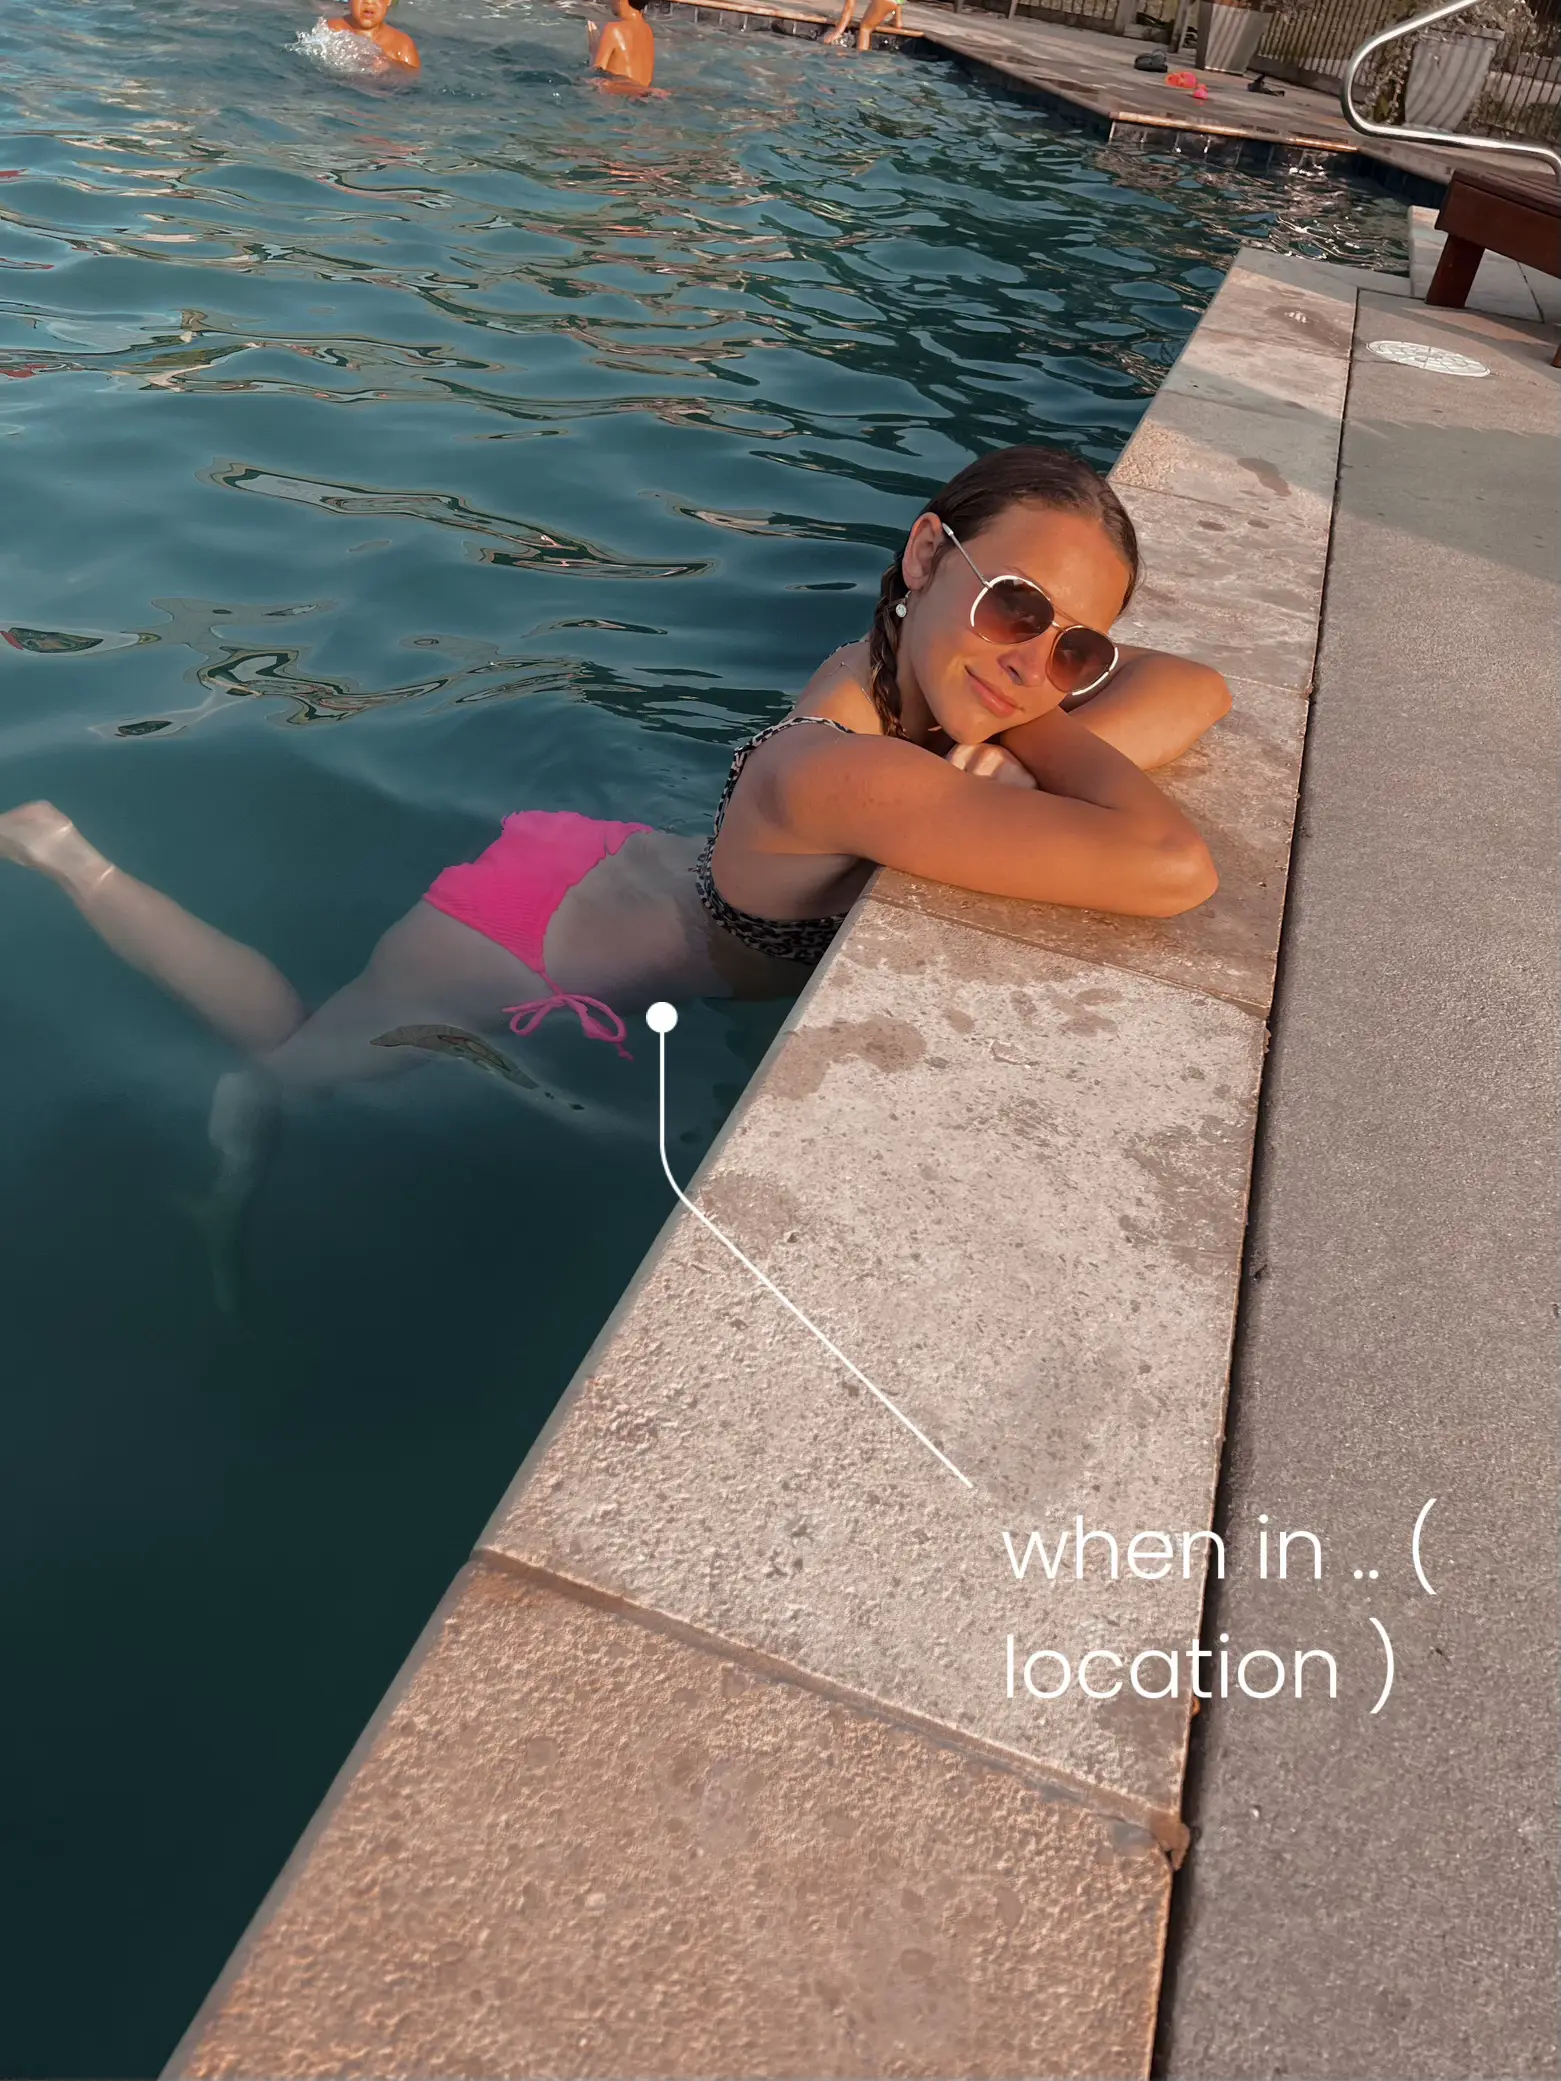  A woman in a bikini is laying on a ledge in a pool.